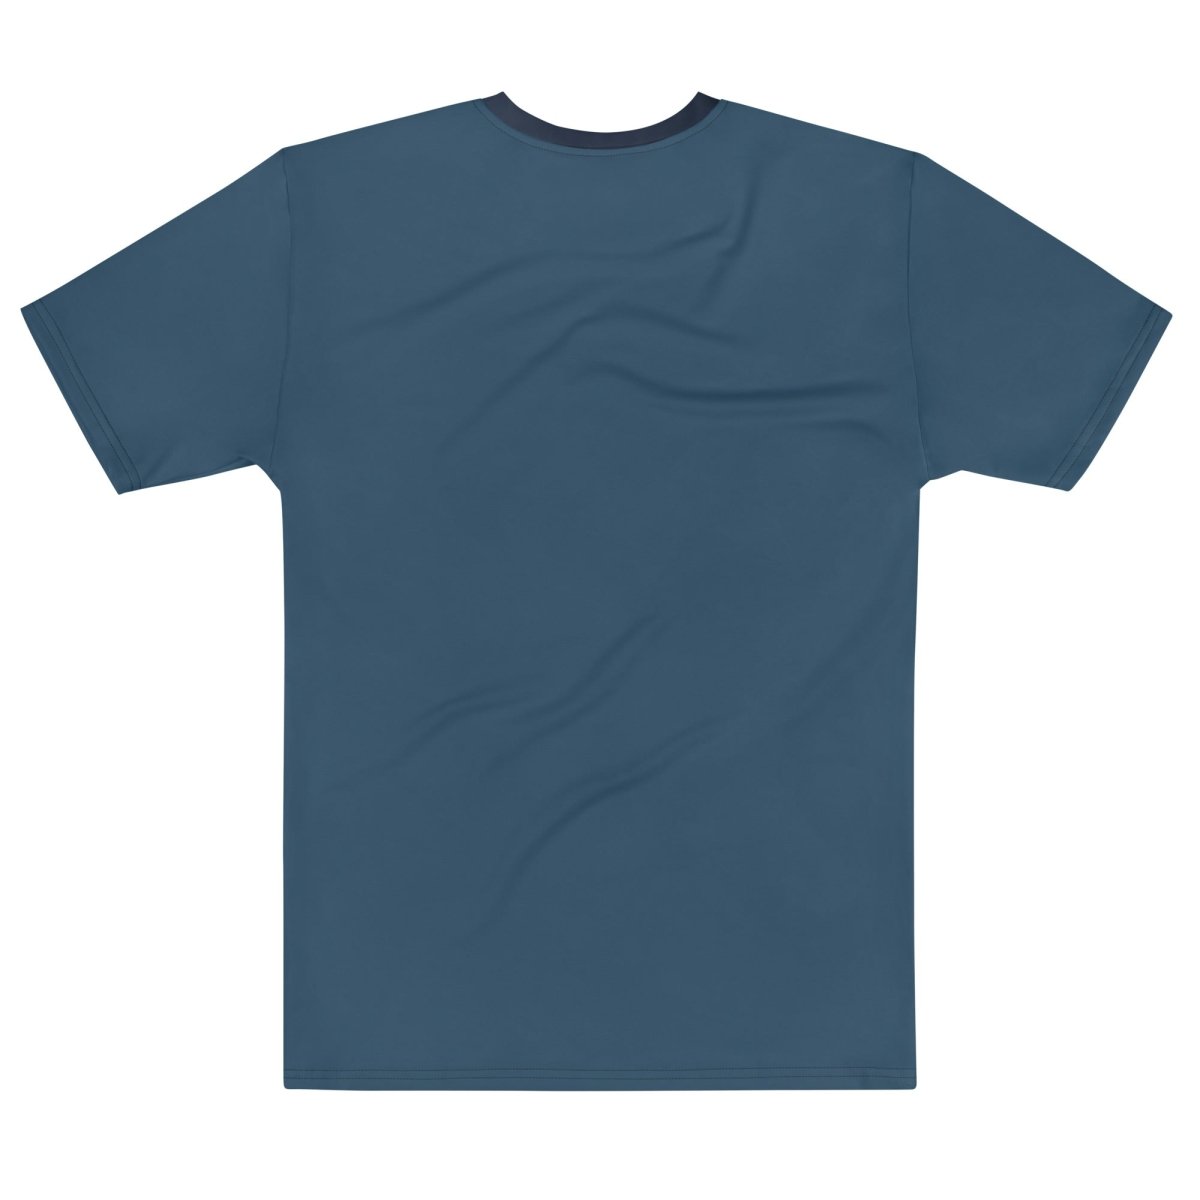 All - Over Print Skydiving Yorkshire Terrier Selfie T - Shirt (men) - M - AI Store